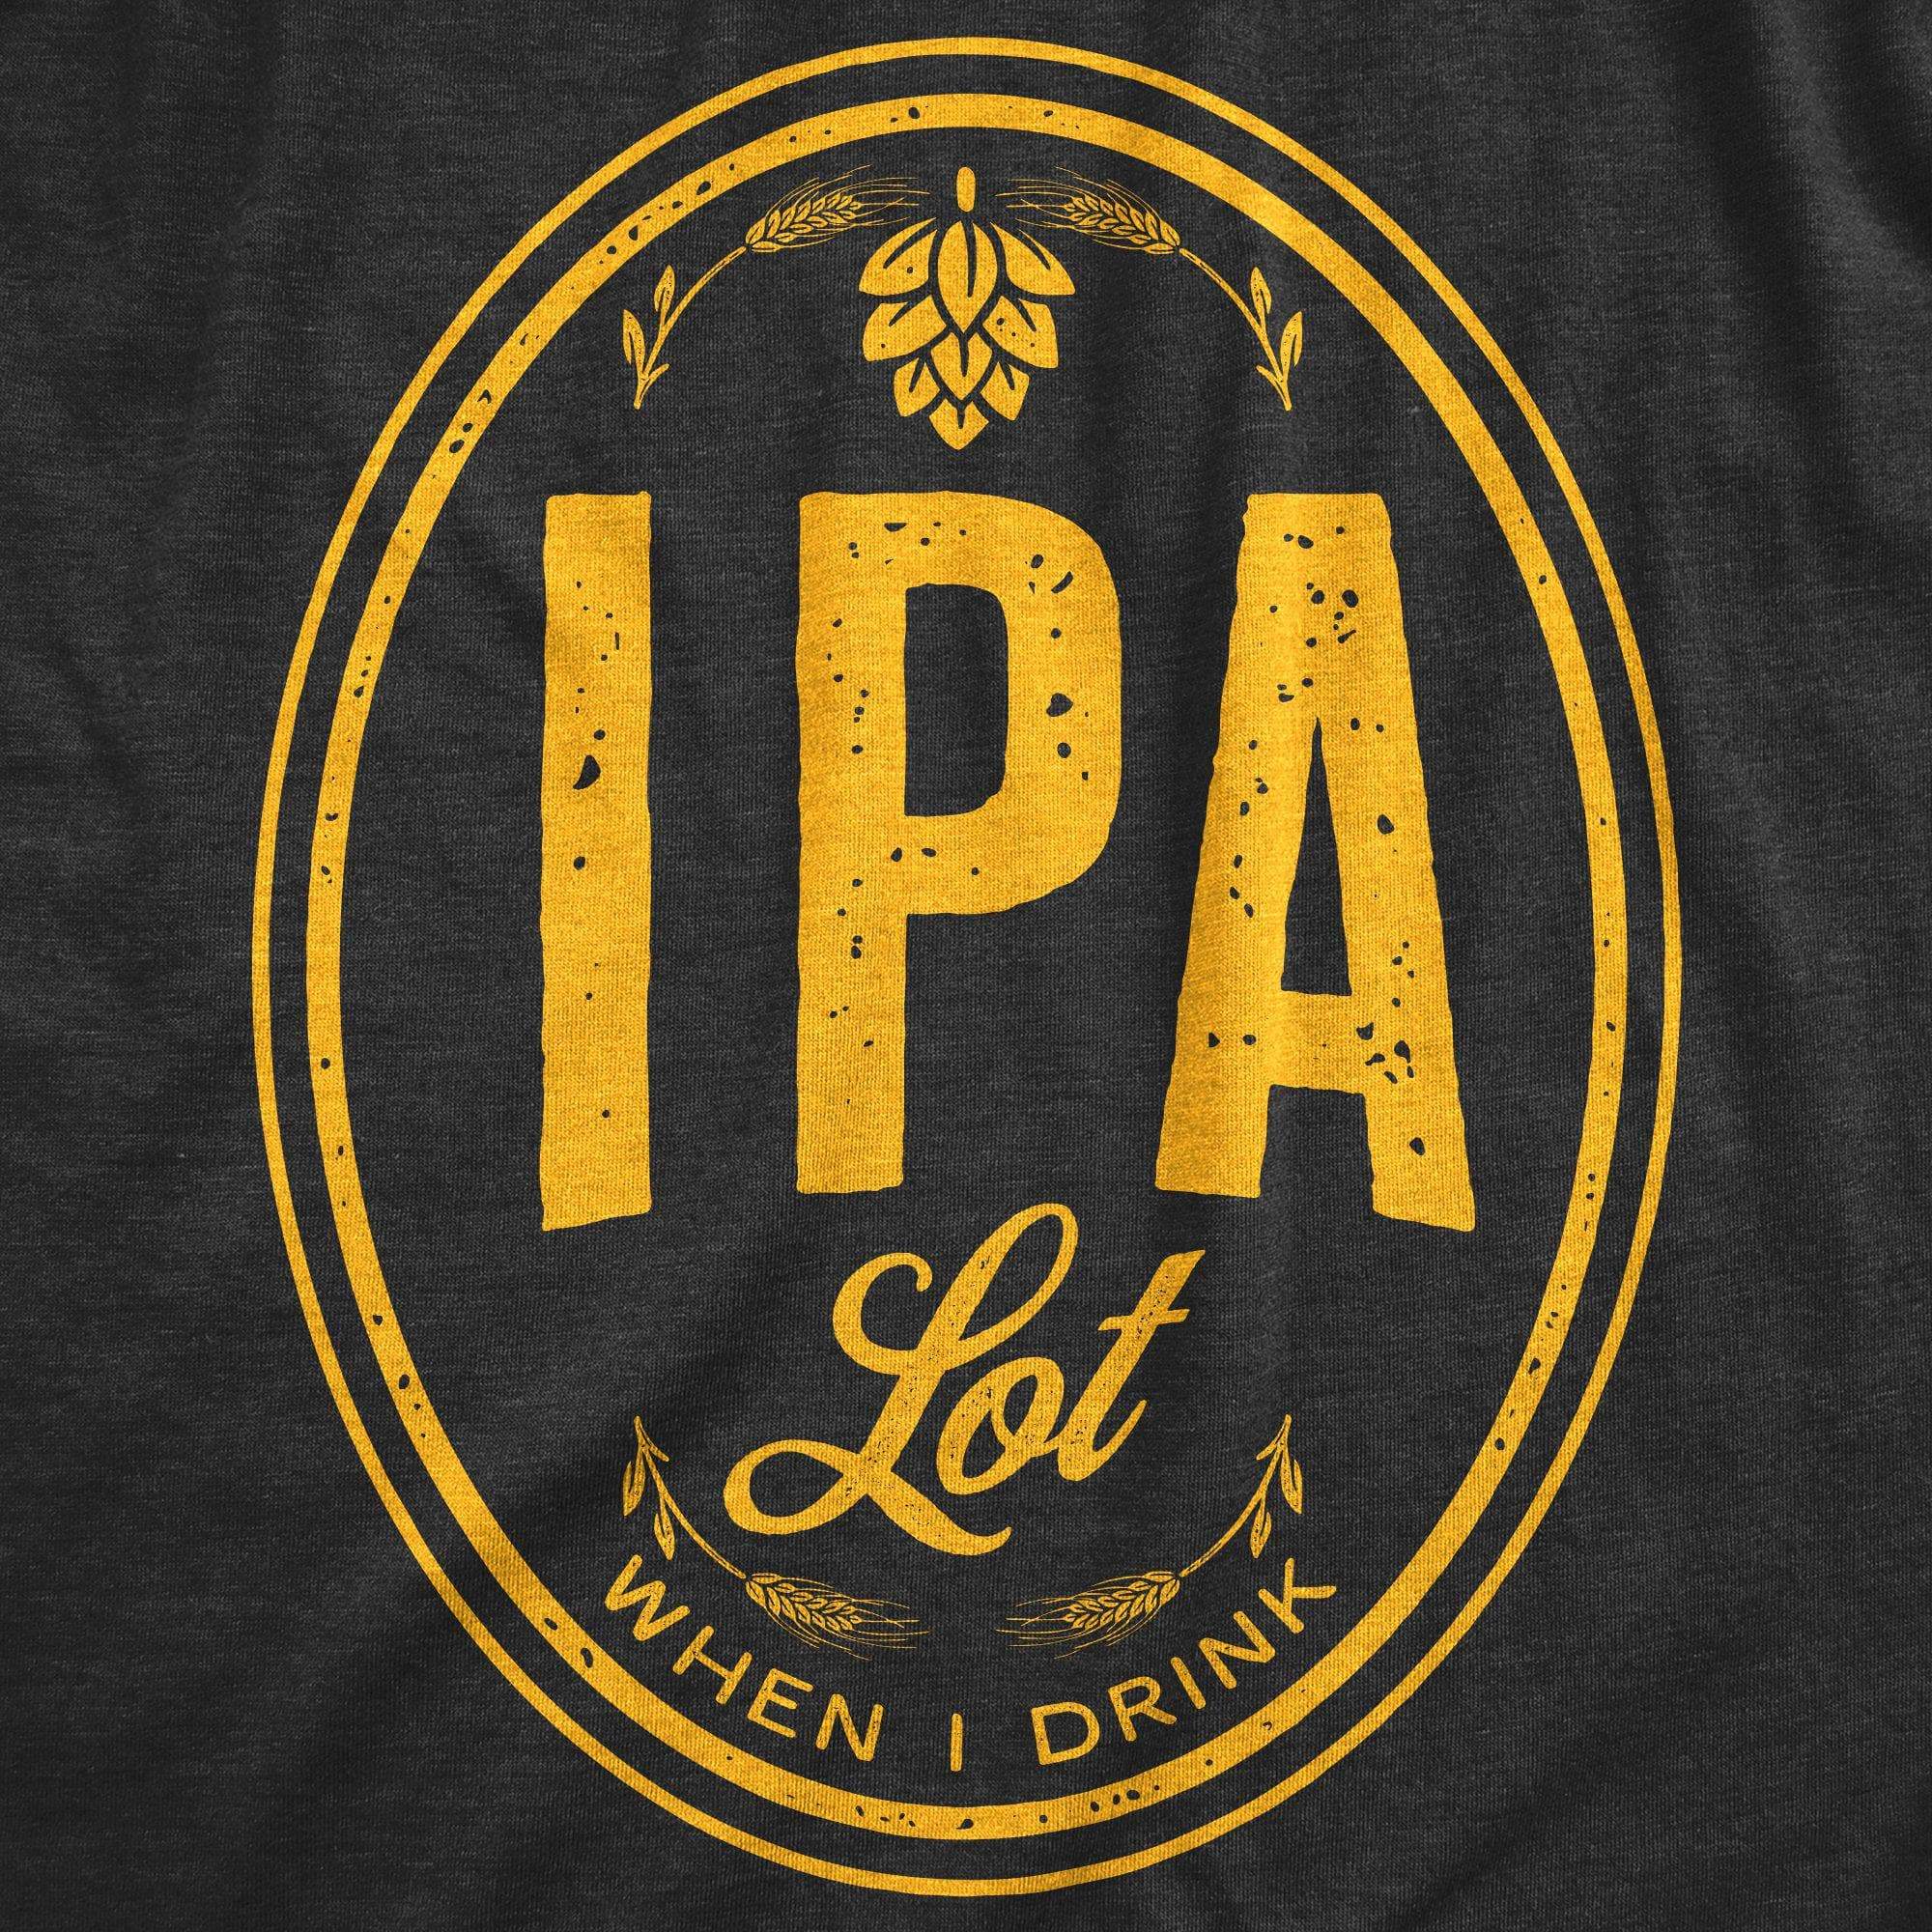 IPA Lot When I Drink Men's Tshirt - Crazy Dog T-Shirts